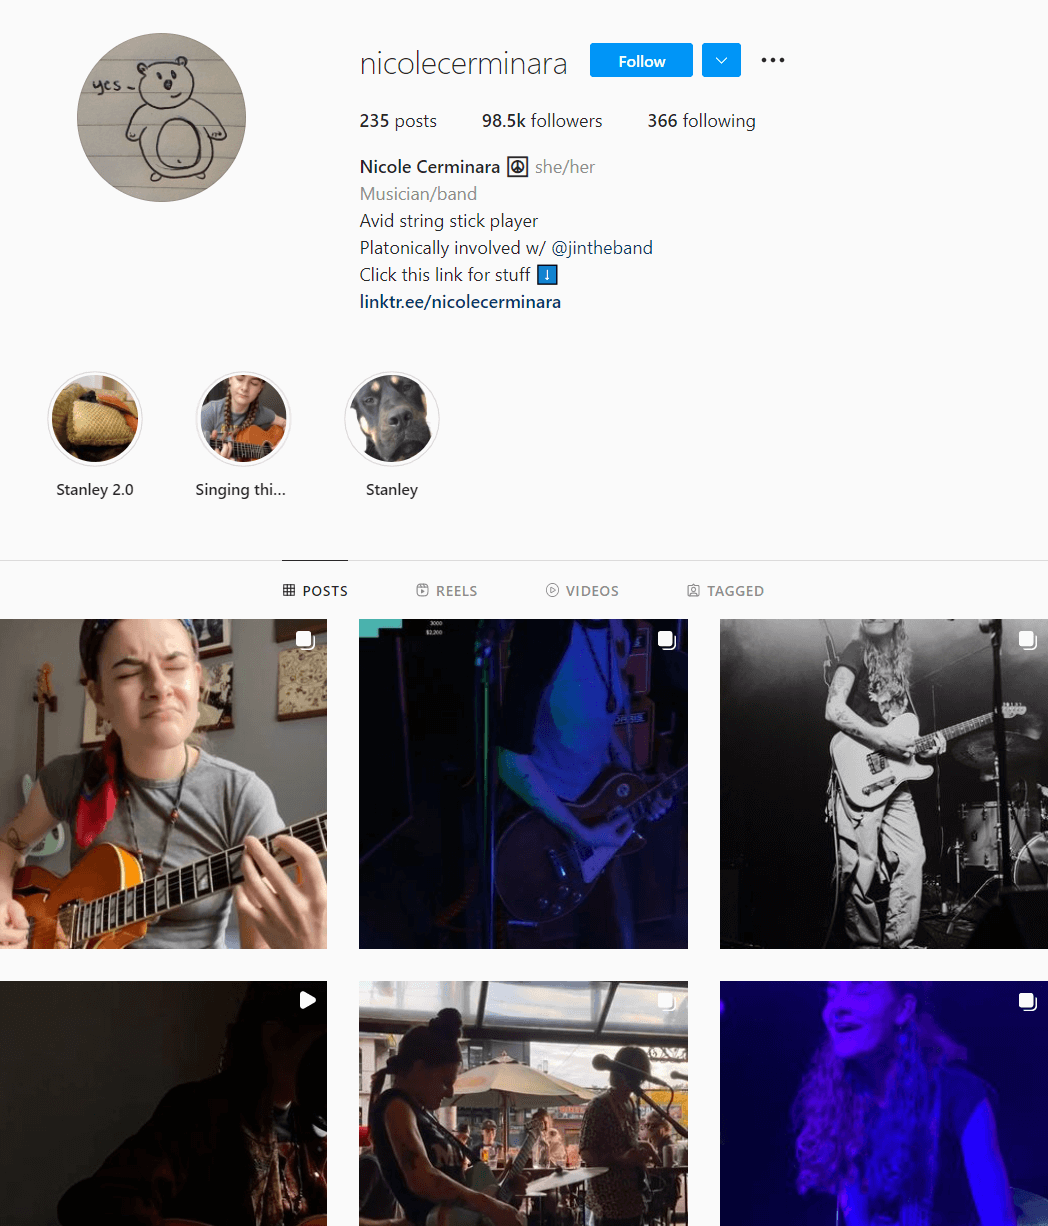 nicolecerminara guitar Instagram account